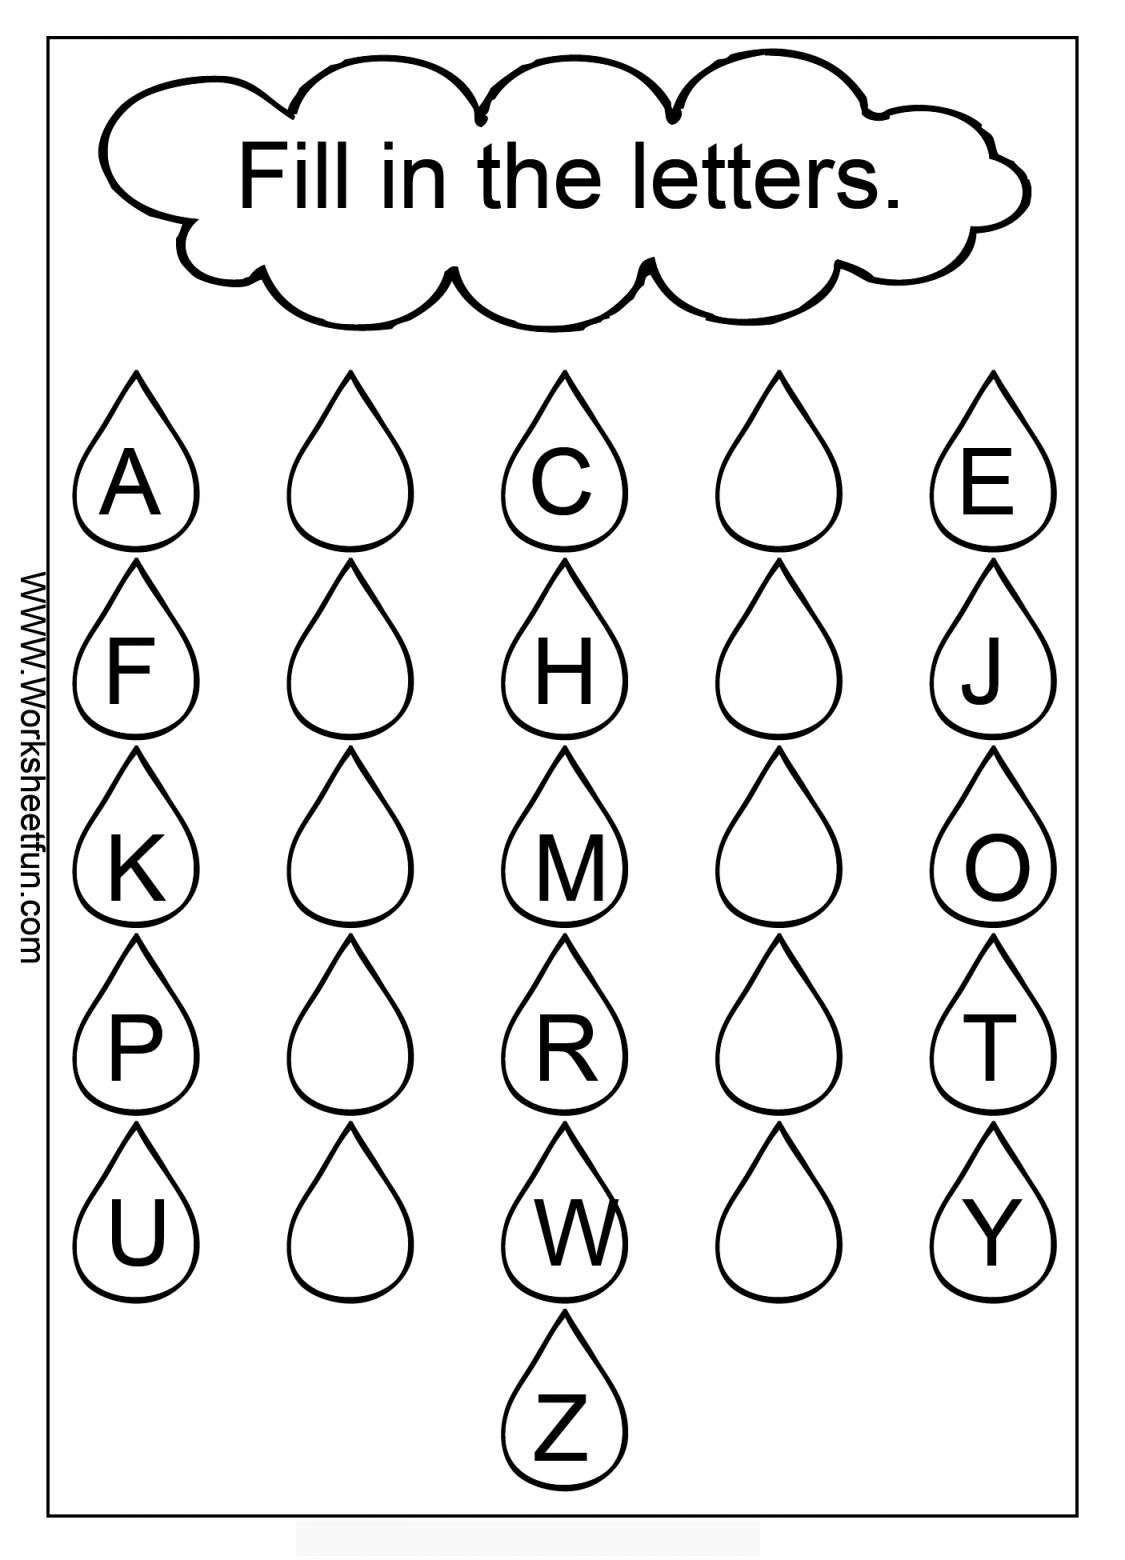 Alphabet Worksheets Pdf | Iancconf | Alphabet Worksheets for Alphabet Worksheets For Preschool Pdf